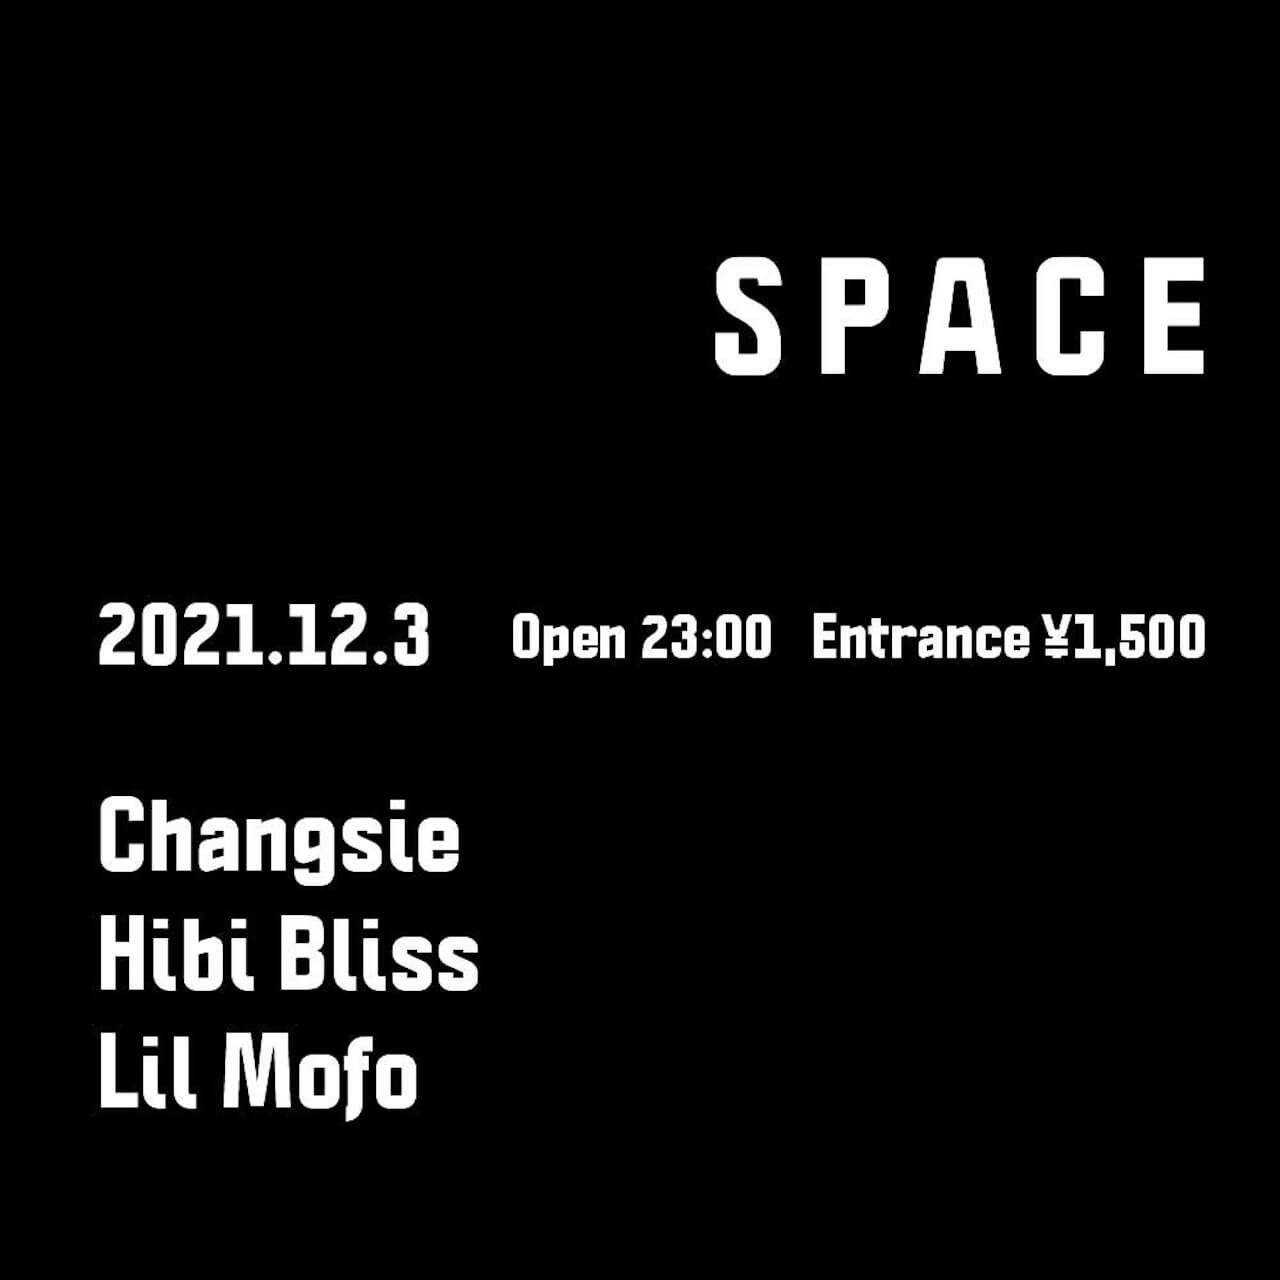 Hibi BlissとLil MofoによるパーティにChangsieの参加が決定｜12月3日、新宿SPACEで開催 music211201-changsie-space-1